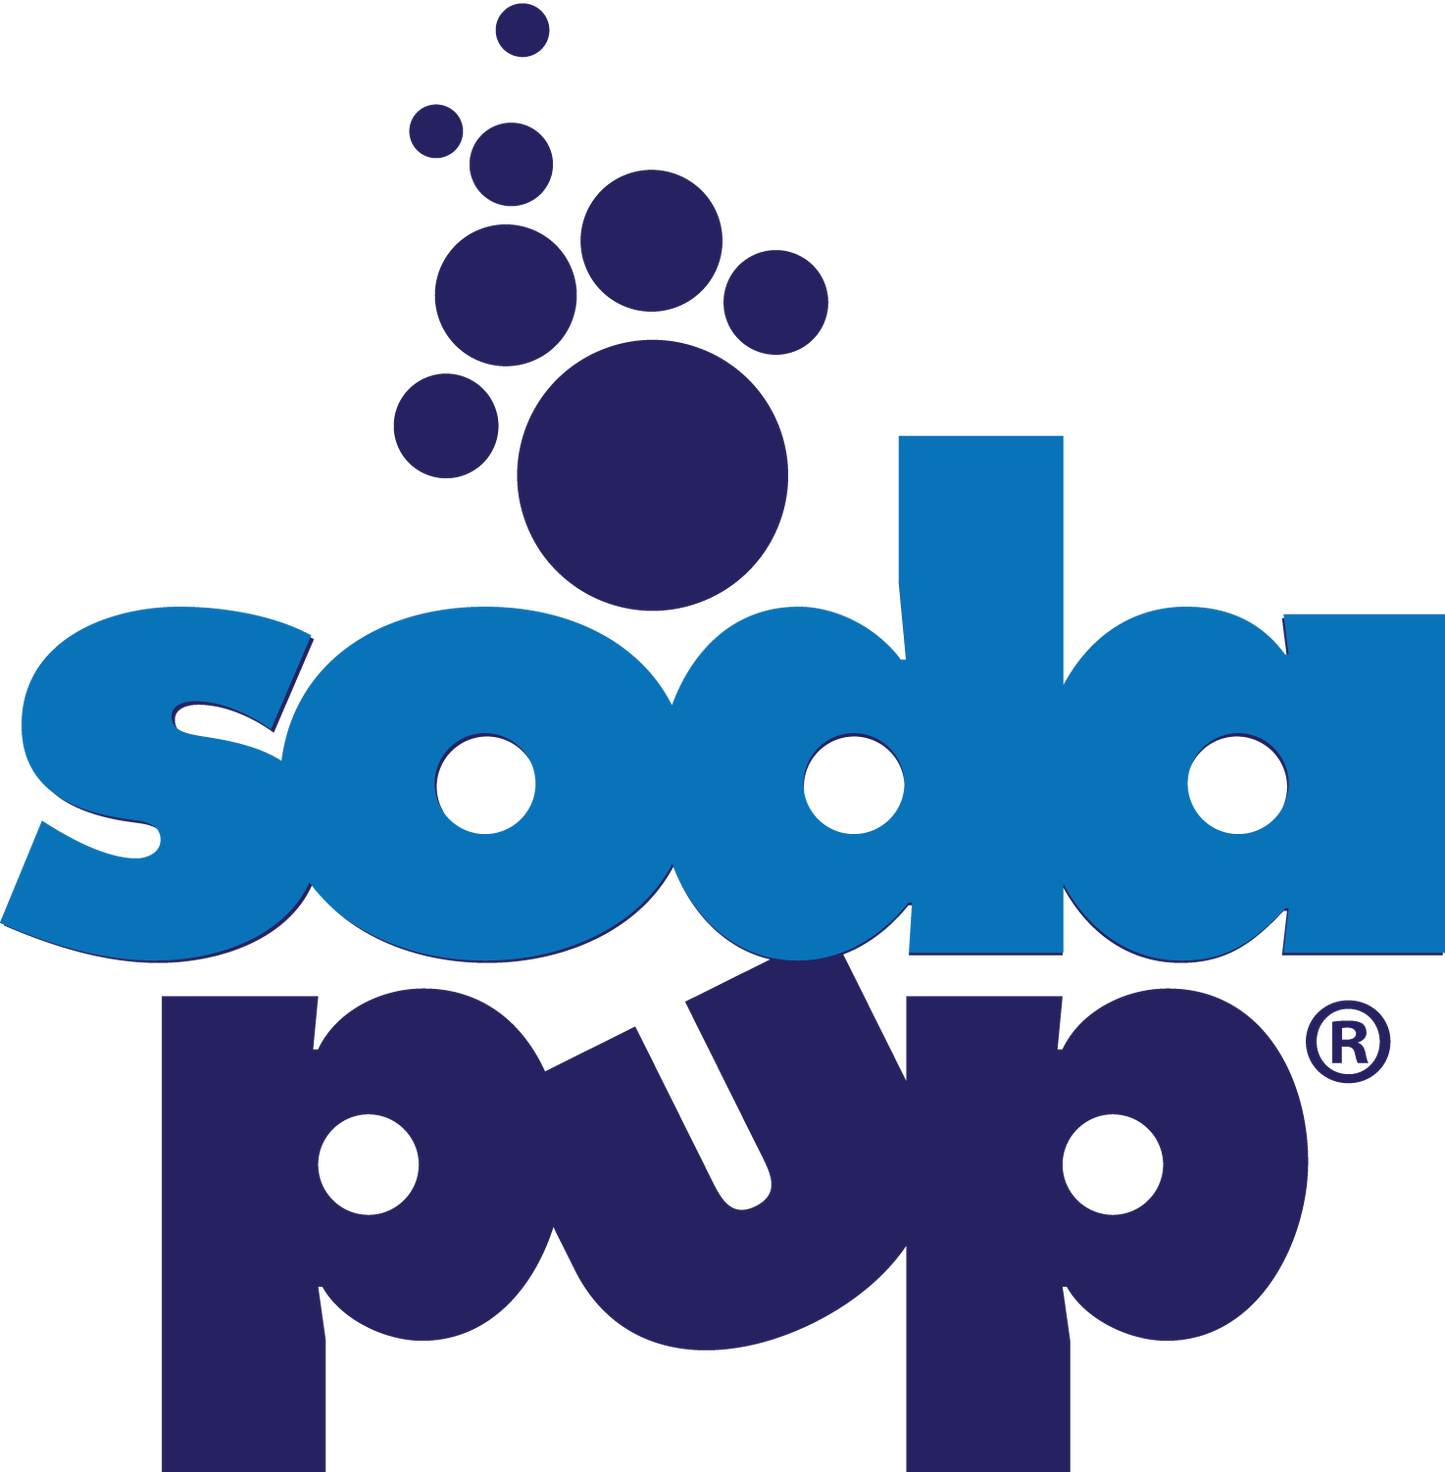 SodaPup Wave E-Bowl slow feeder - Large | Blue